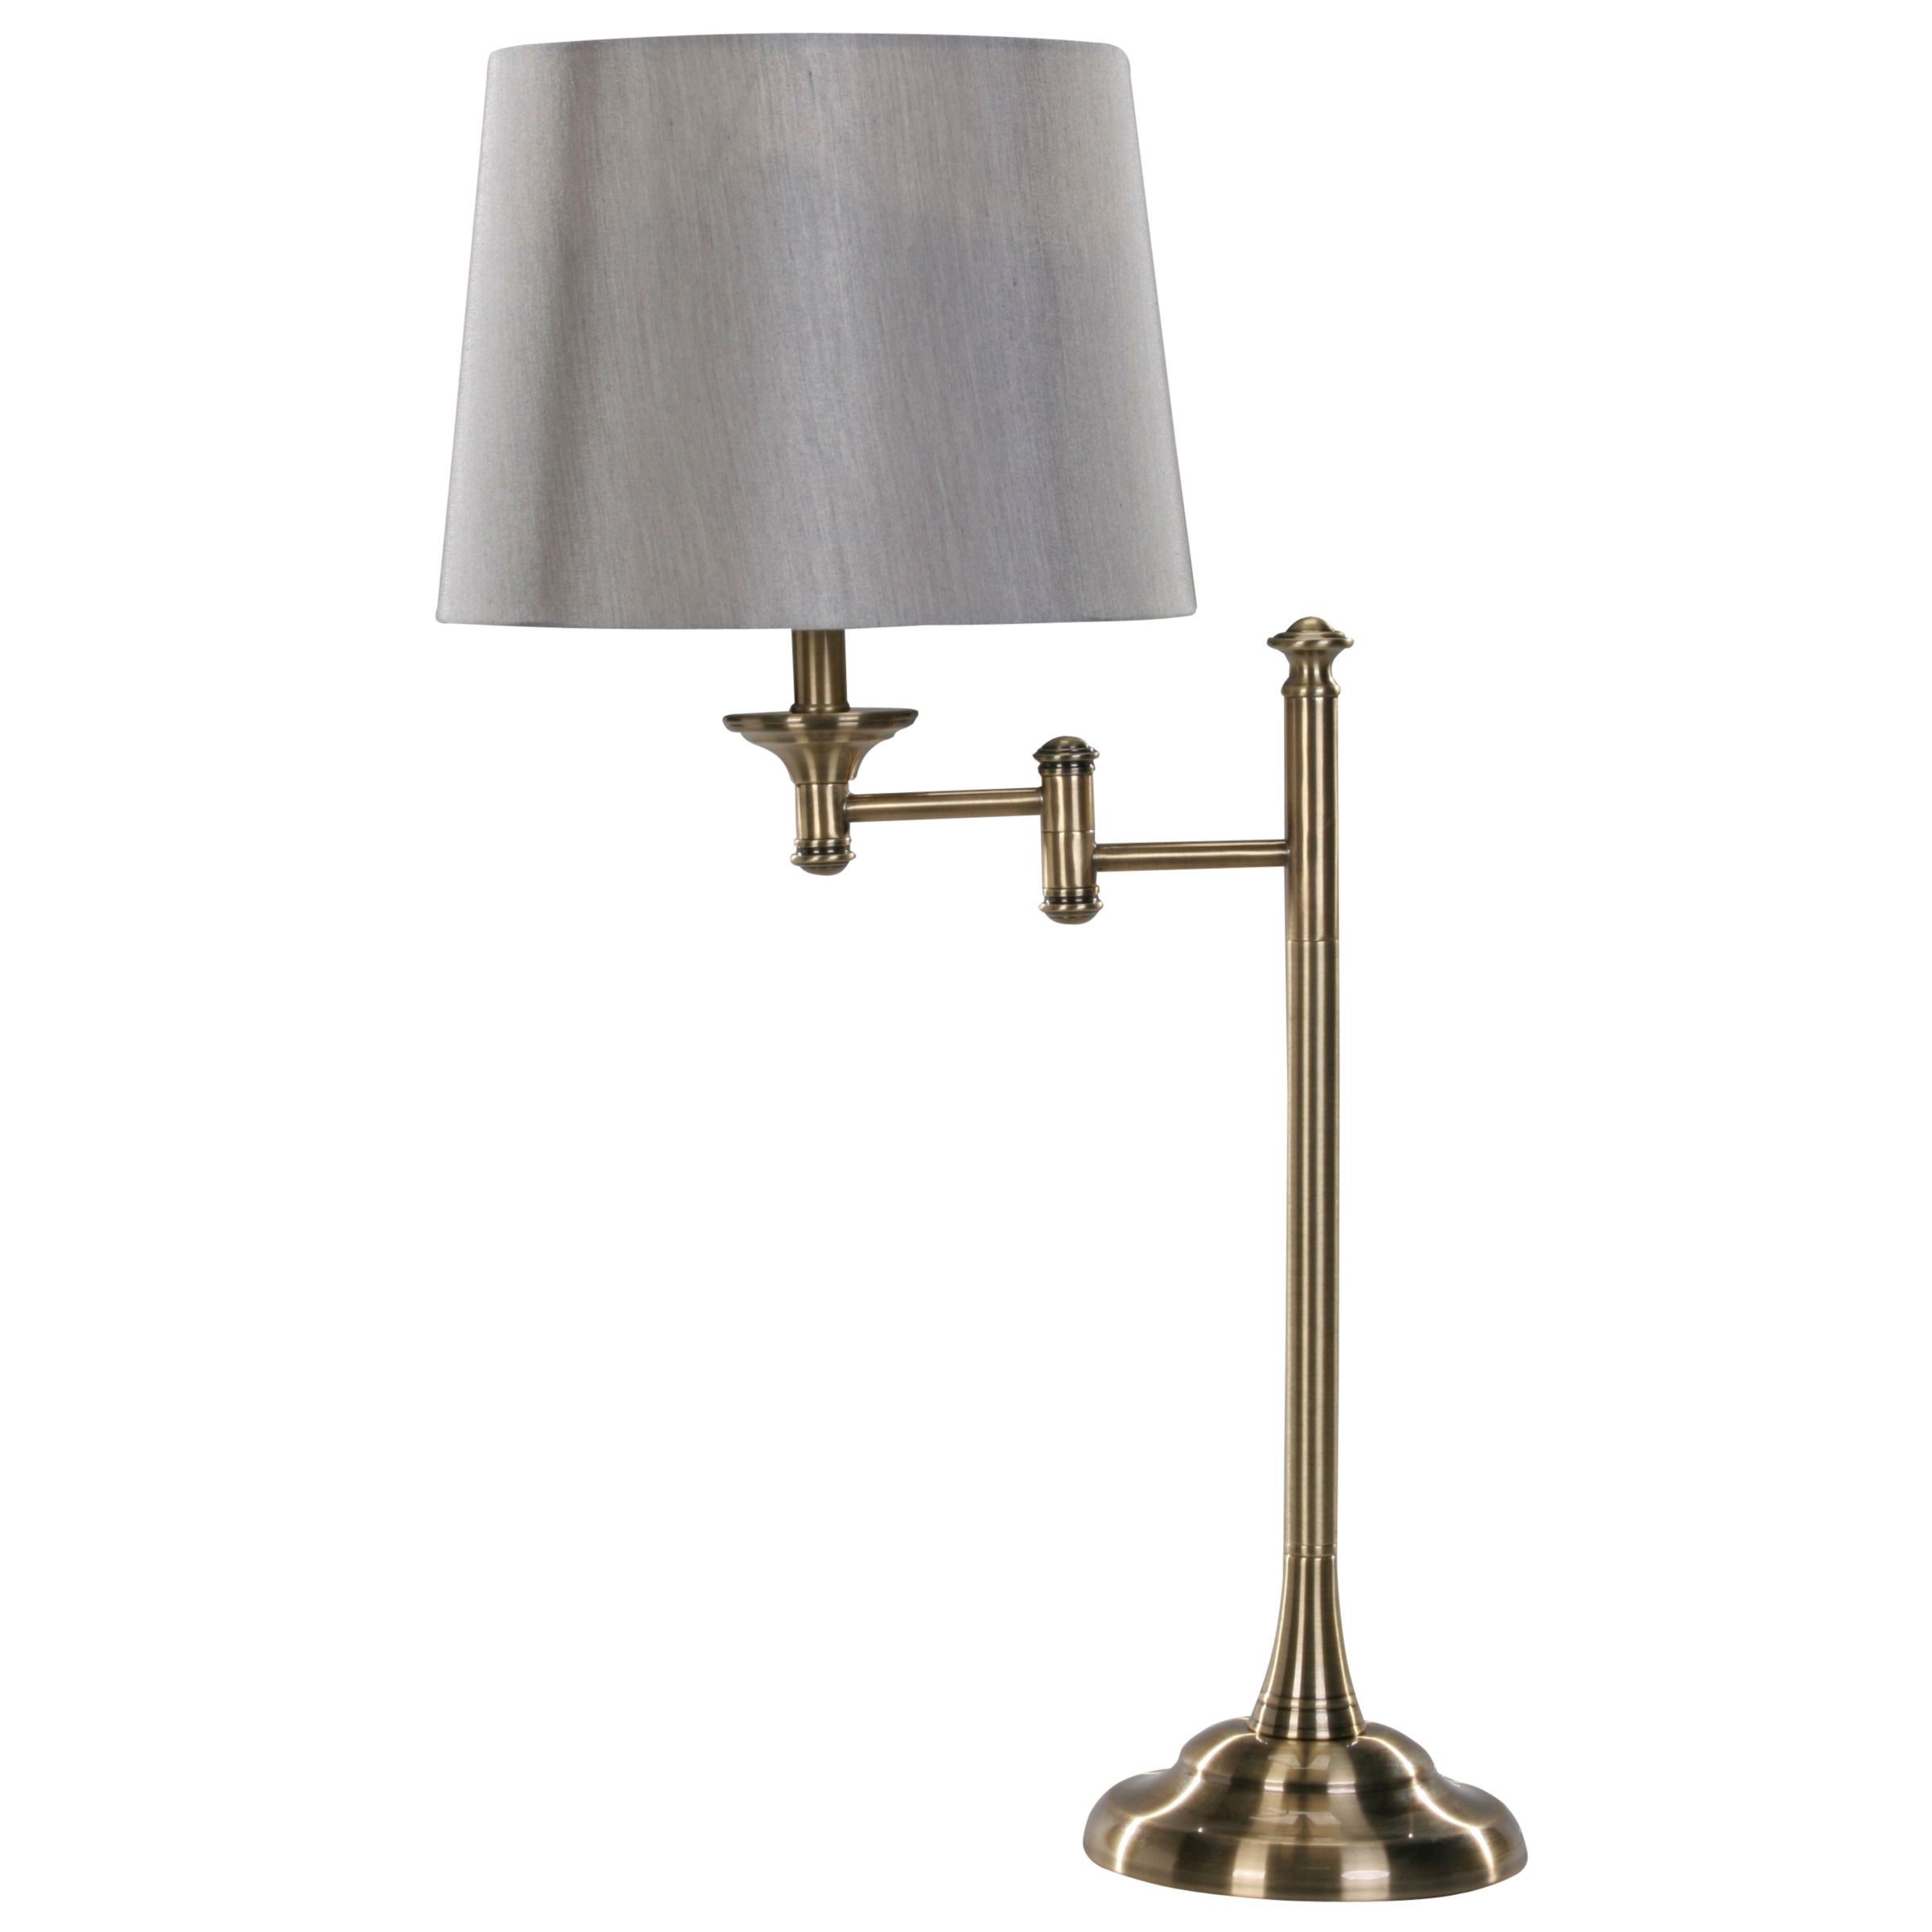 John Lewis Dominic Table Lamp, Brass